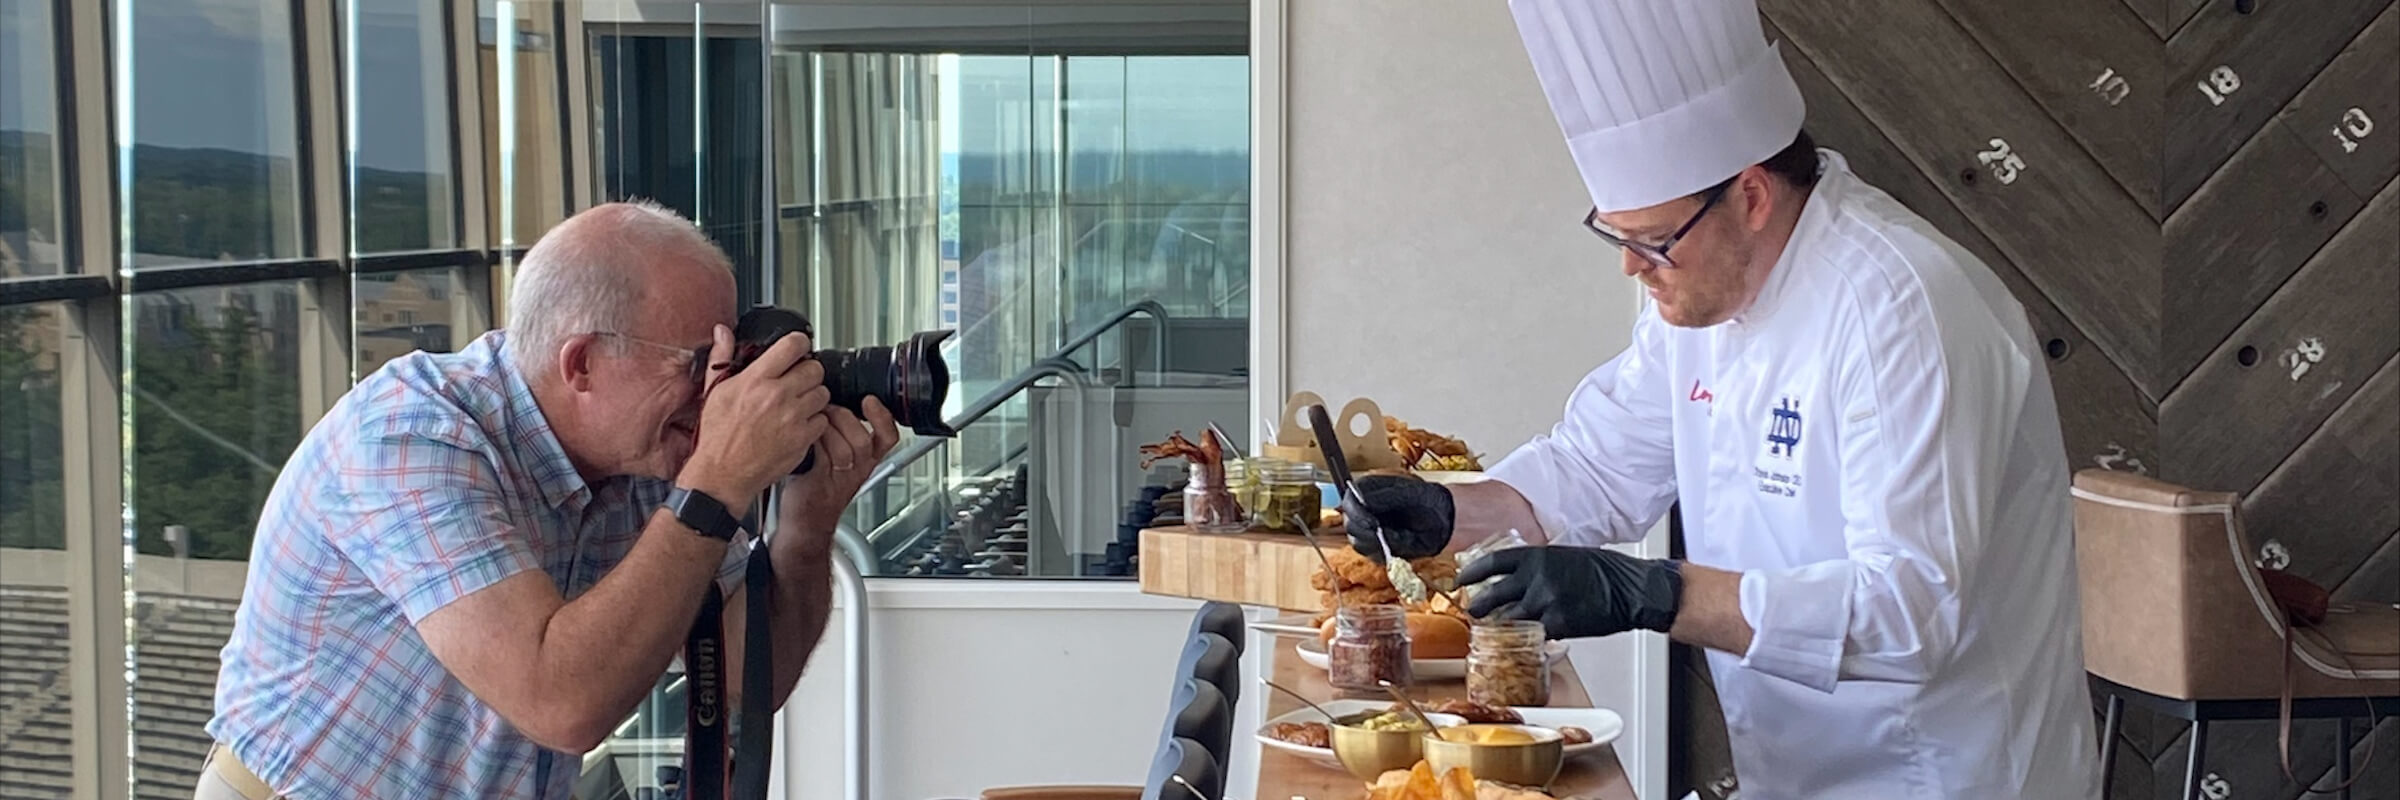 man taking a photo of a chef - Desktop